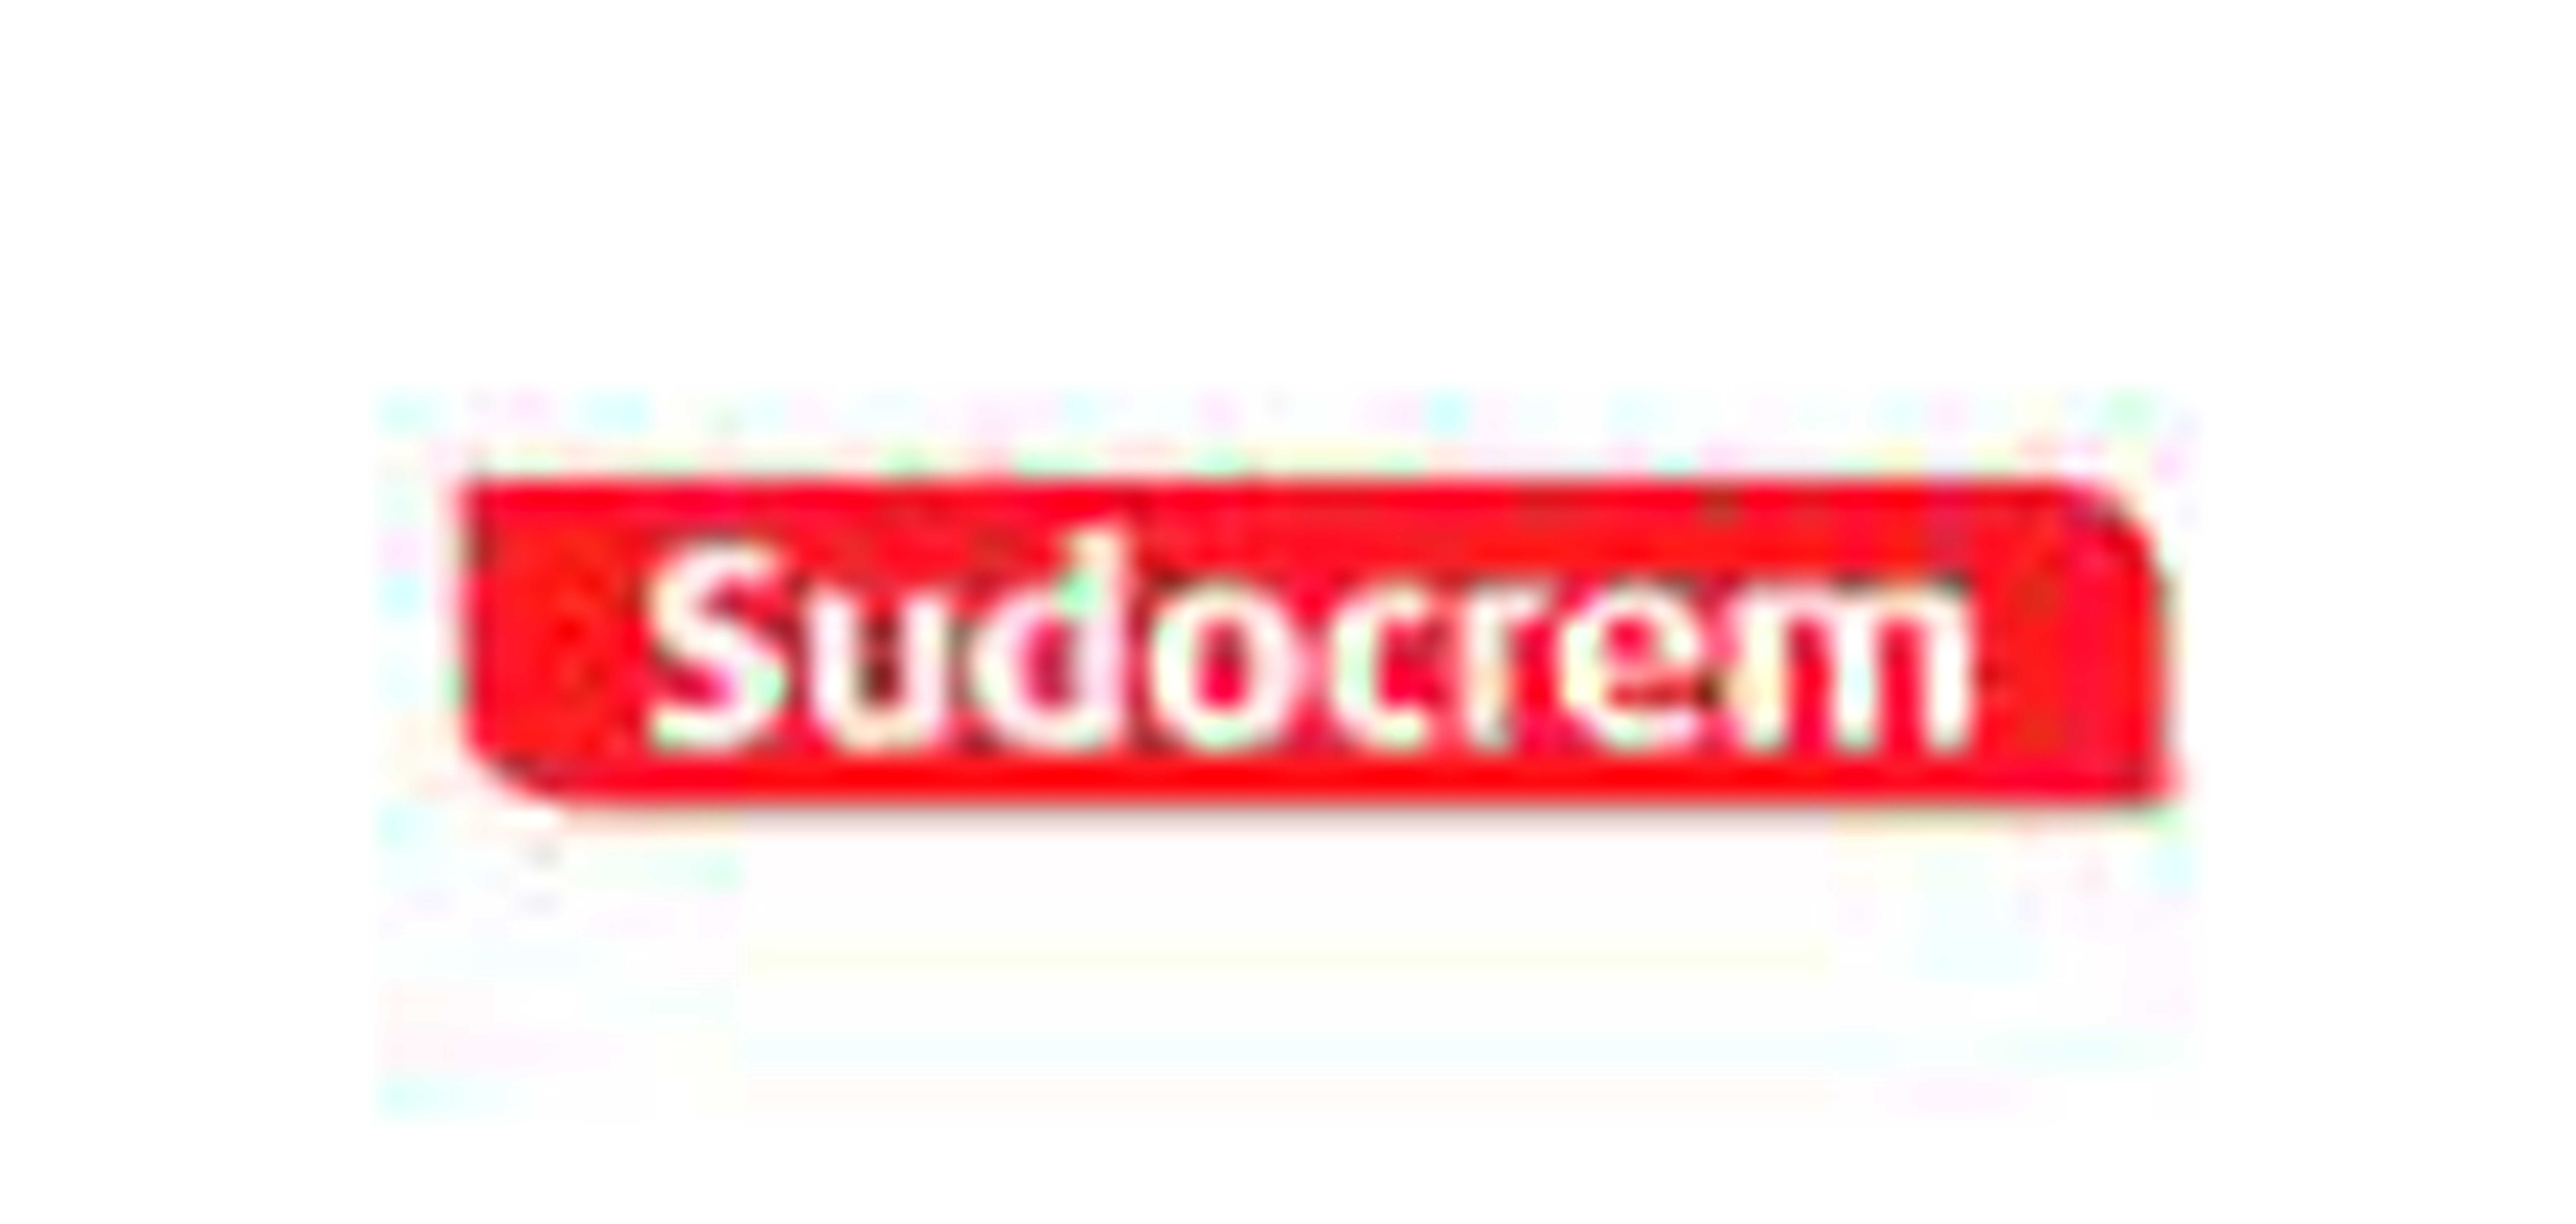 Sudocrem是什么牌子_Sudocrem品牌怎么样?